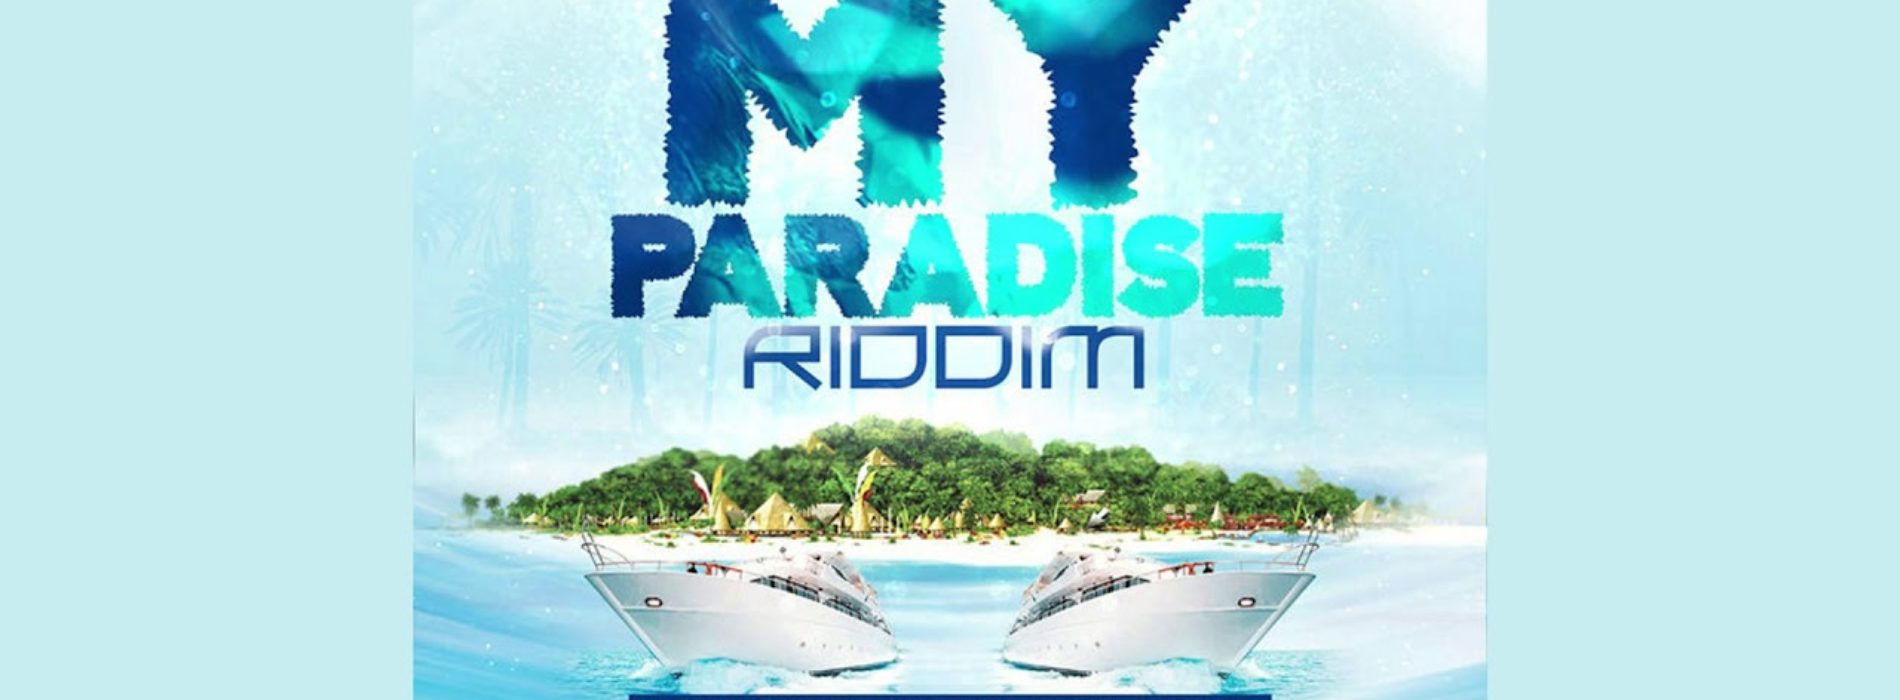 My Paradise Riddim Mix (Full) Feat. Romain Virgo, Chris Martin, Duane Stephenson – Février 2020